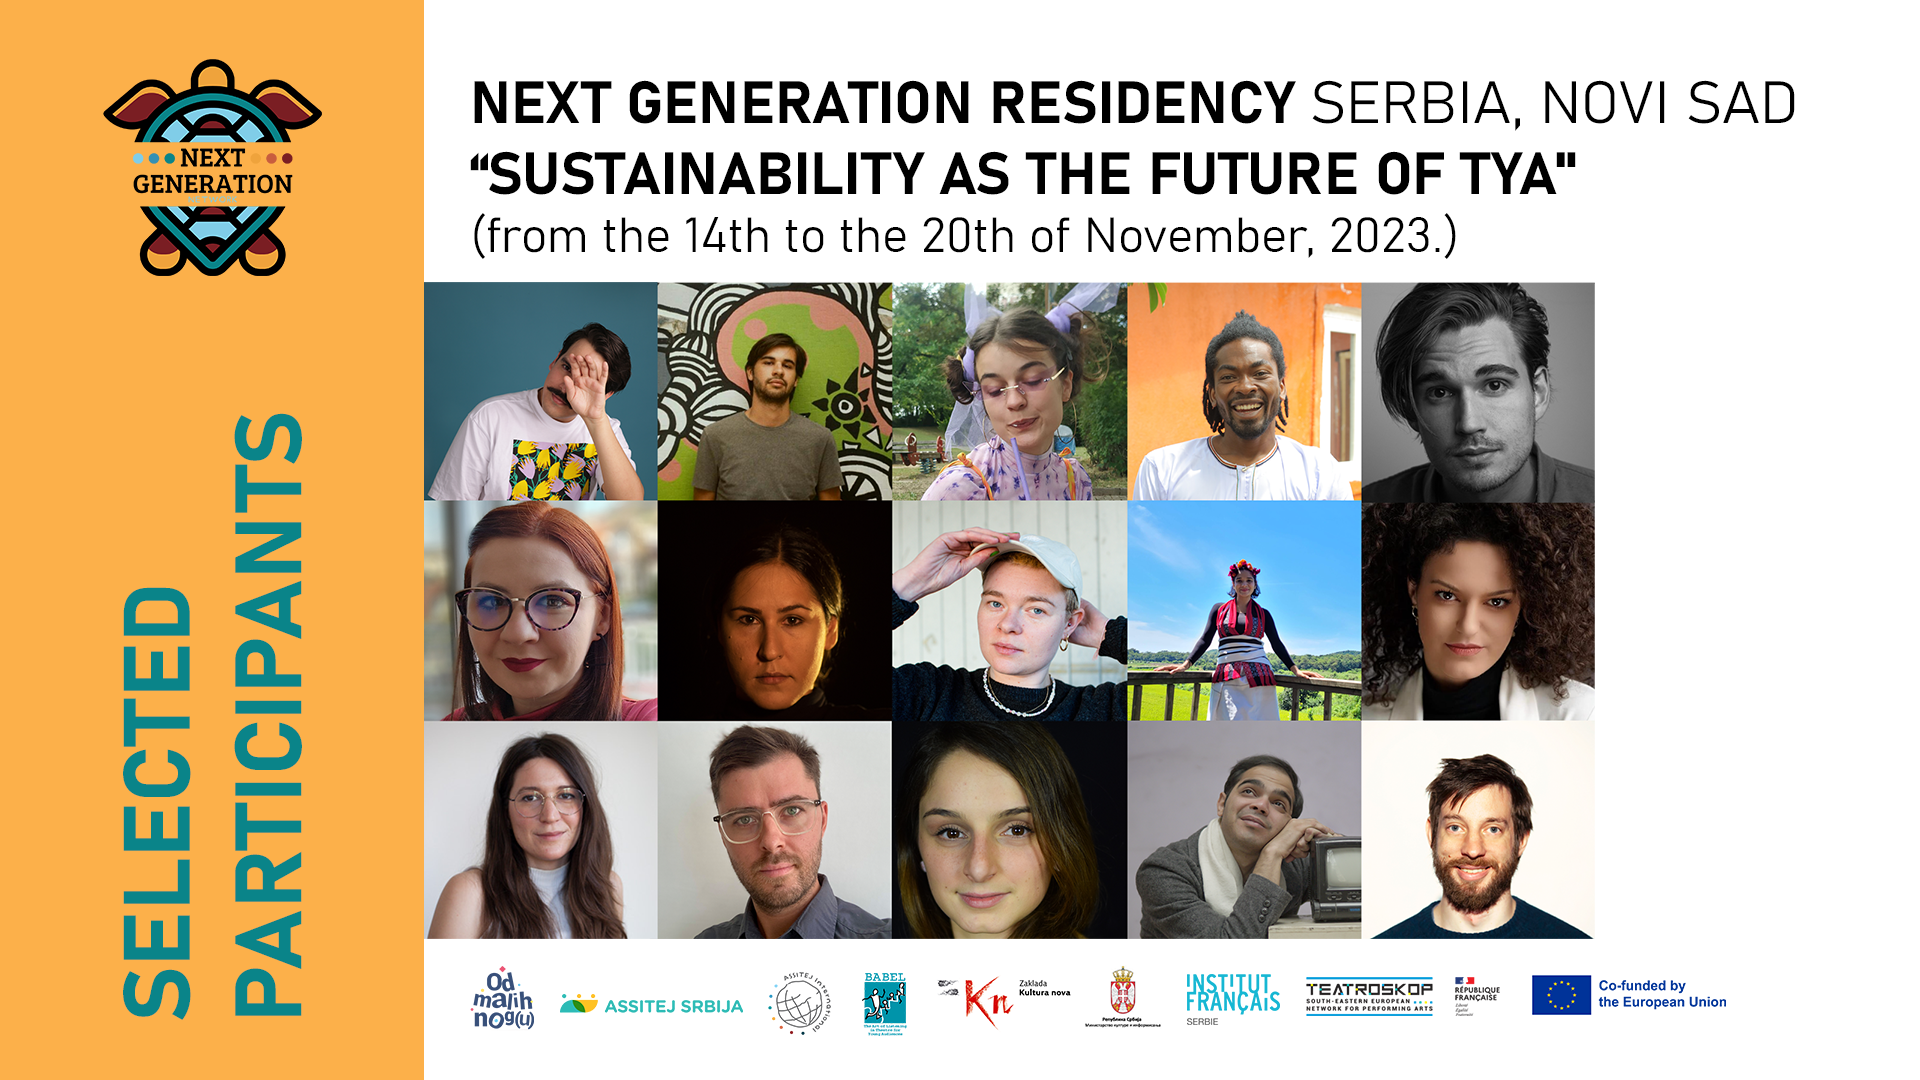 Next Generation Residency: Serbia, Novi Sad “Sustainability as the Future of TYA”